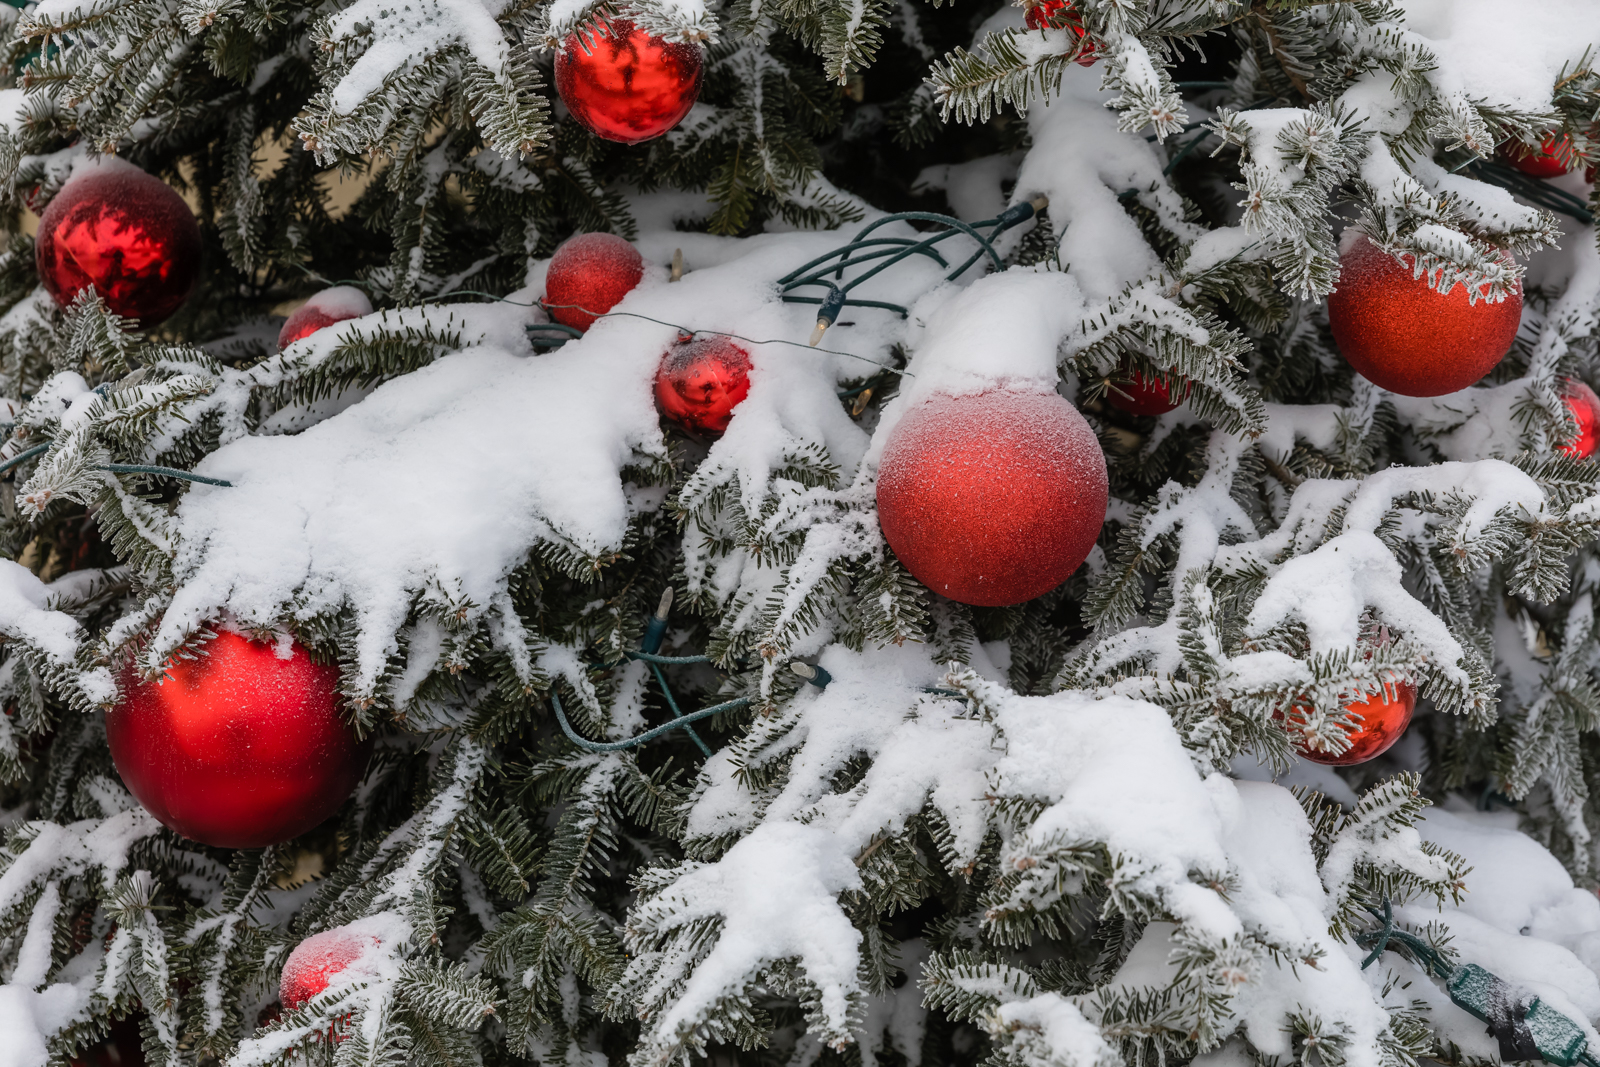 Ornaments and Snow, Quebec City, Quebec, Canada